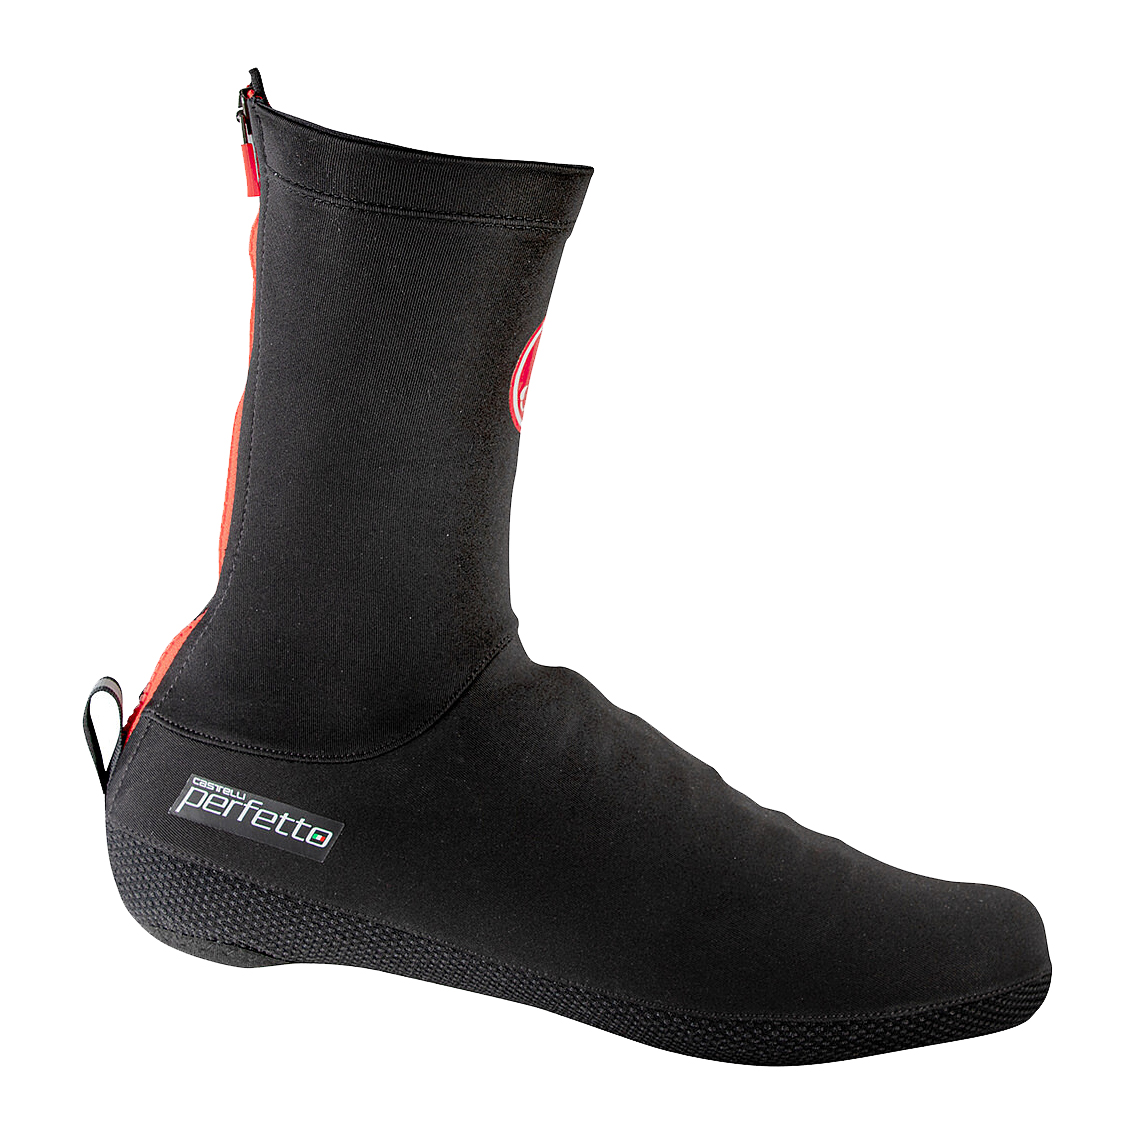 Castelli PIOGGERELLA Waterproof Cycling Shoe Covers BLACK One Pair 